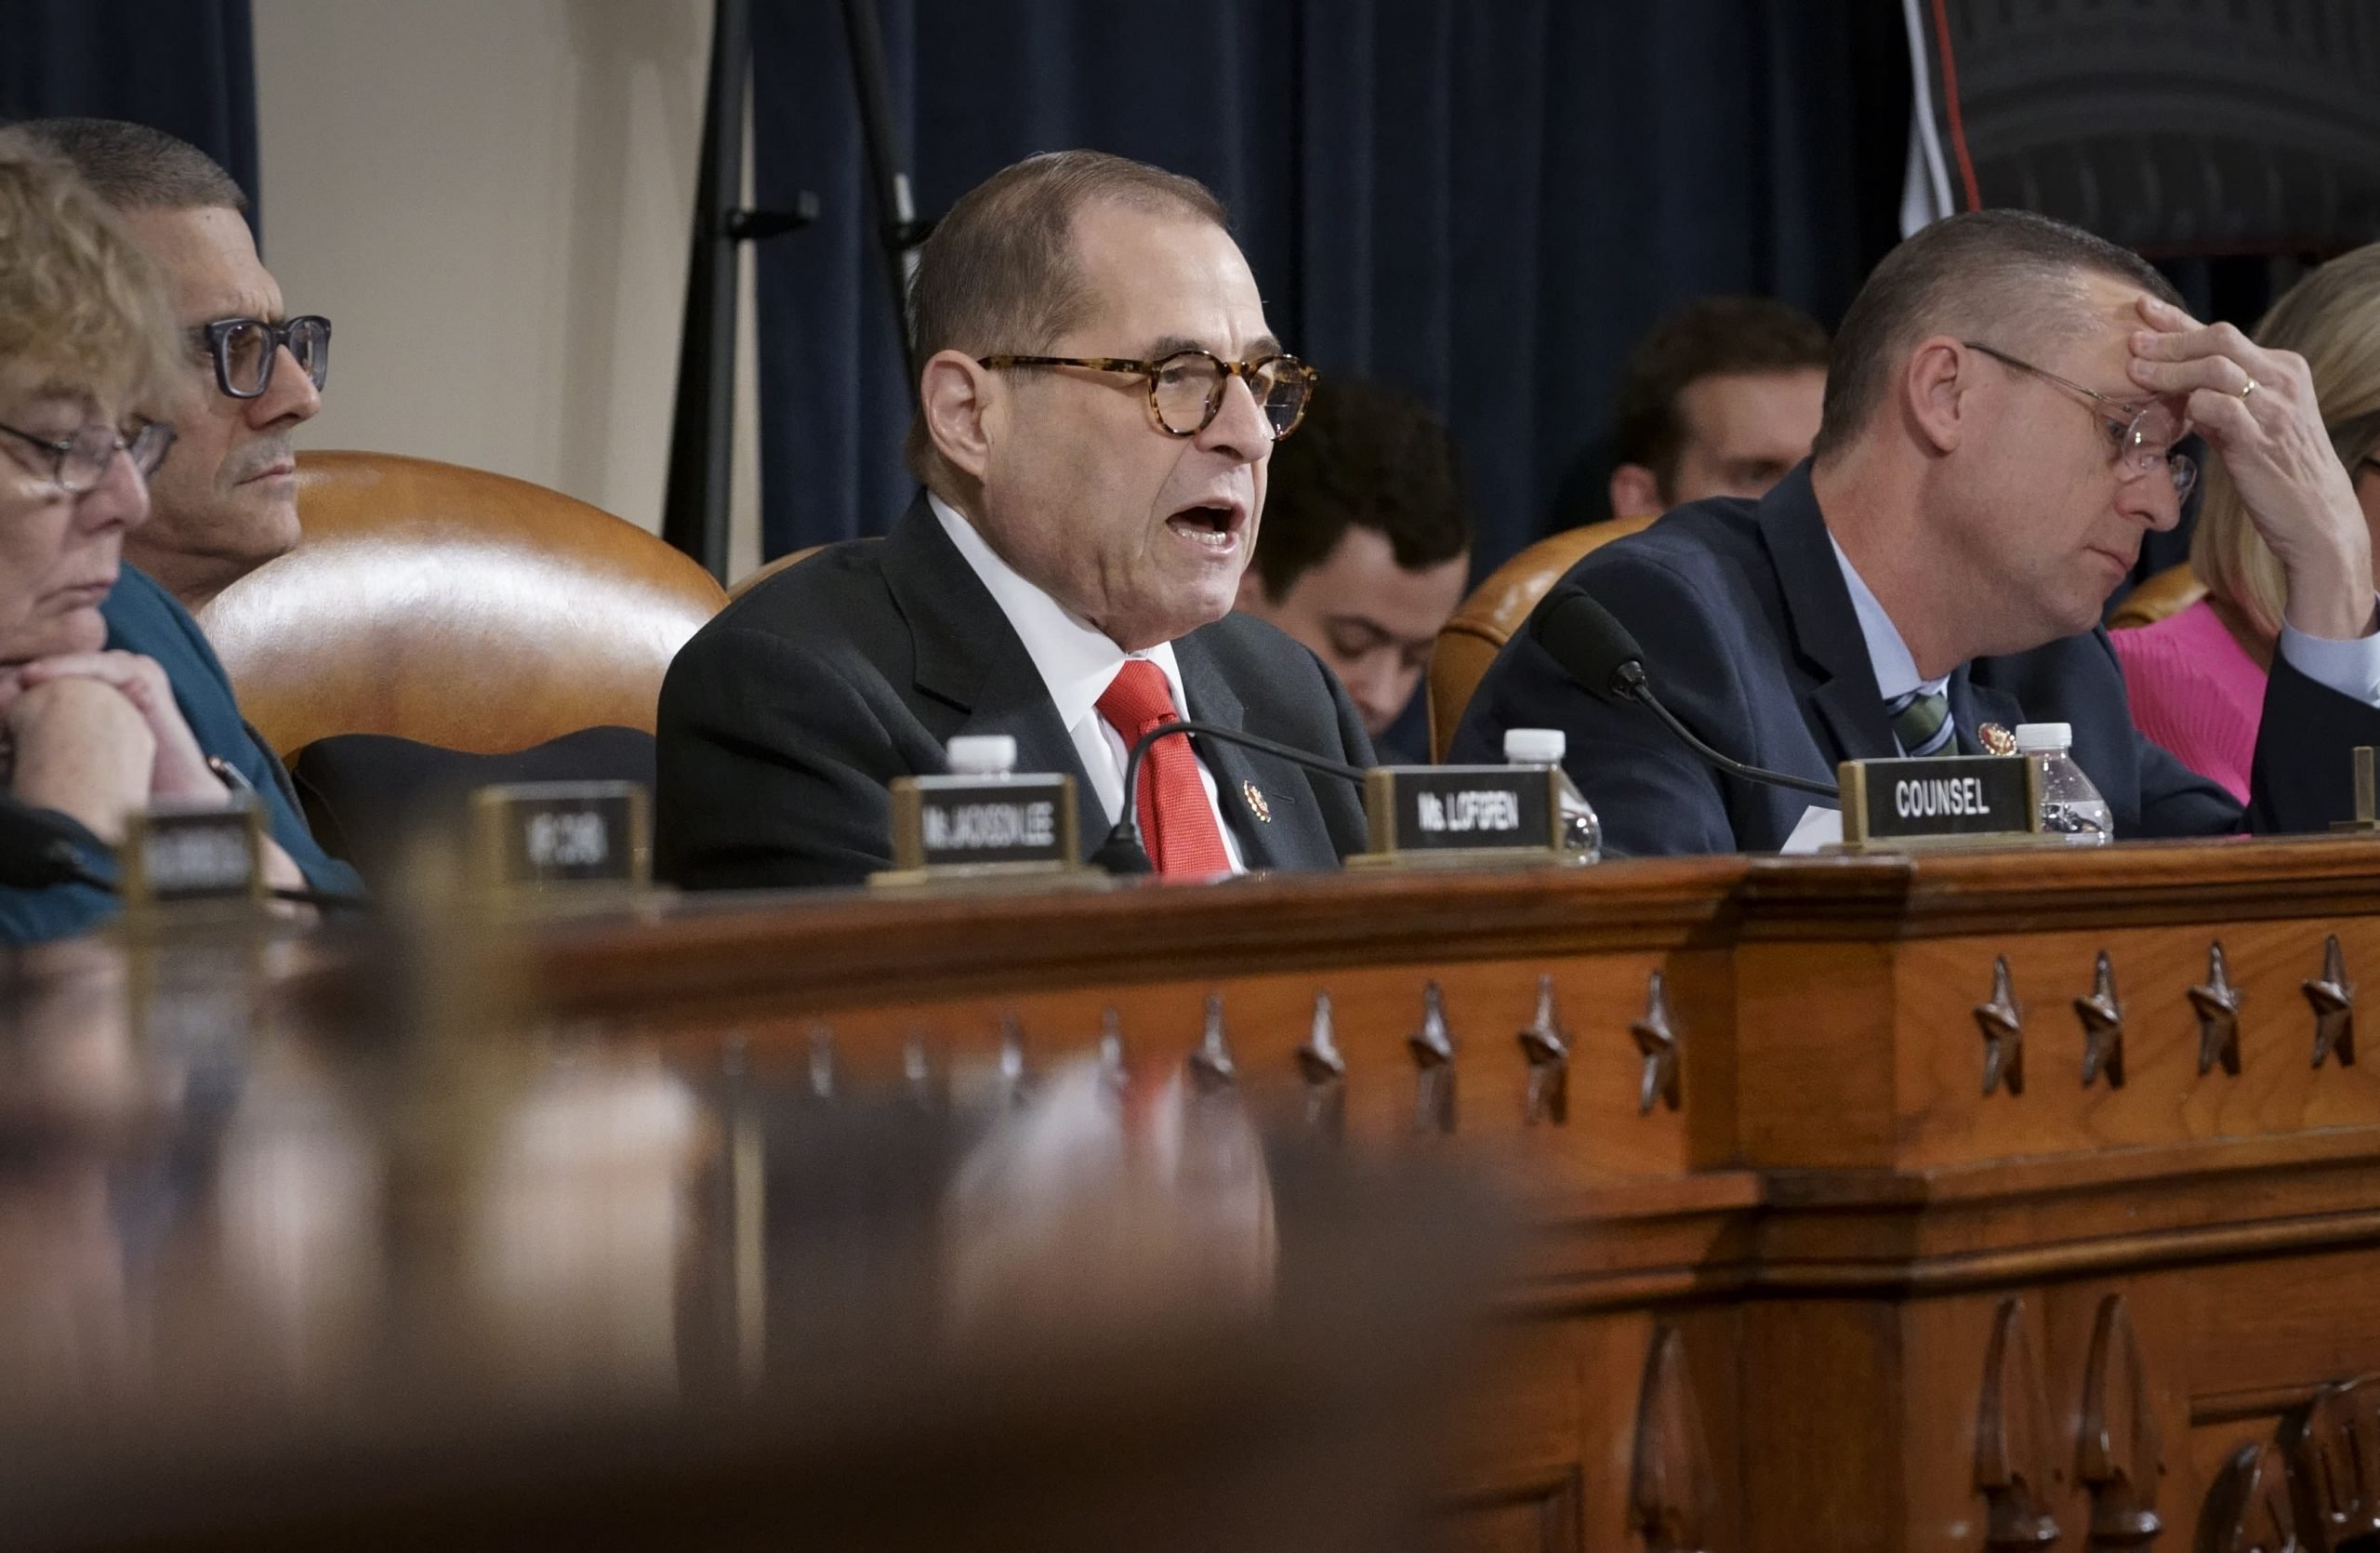 AP FACT CHECK: Impeachment hearing draws too